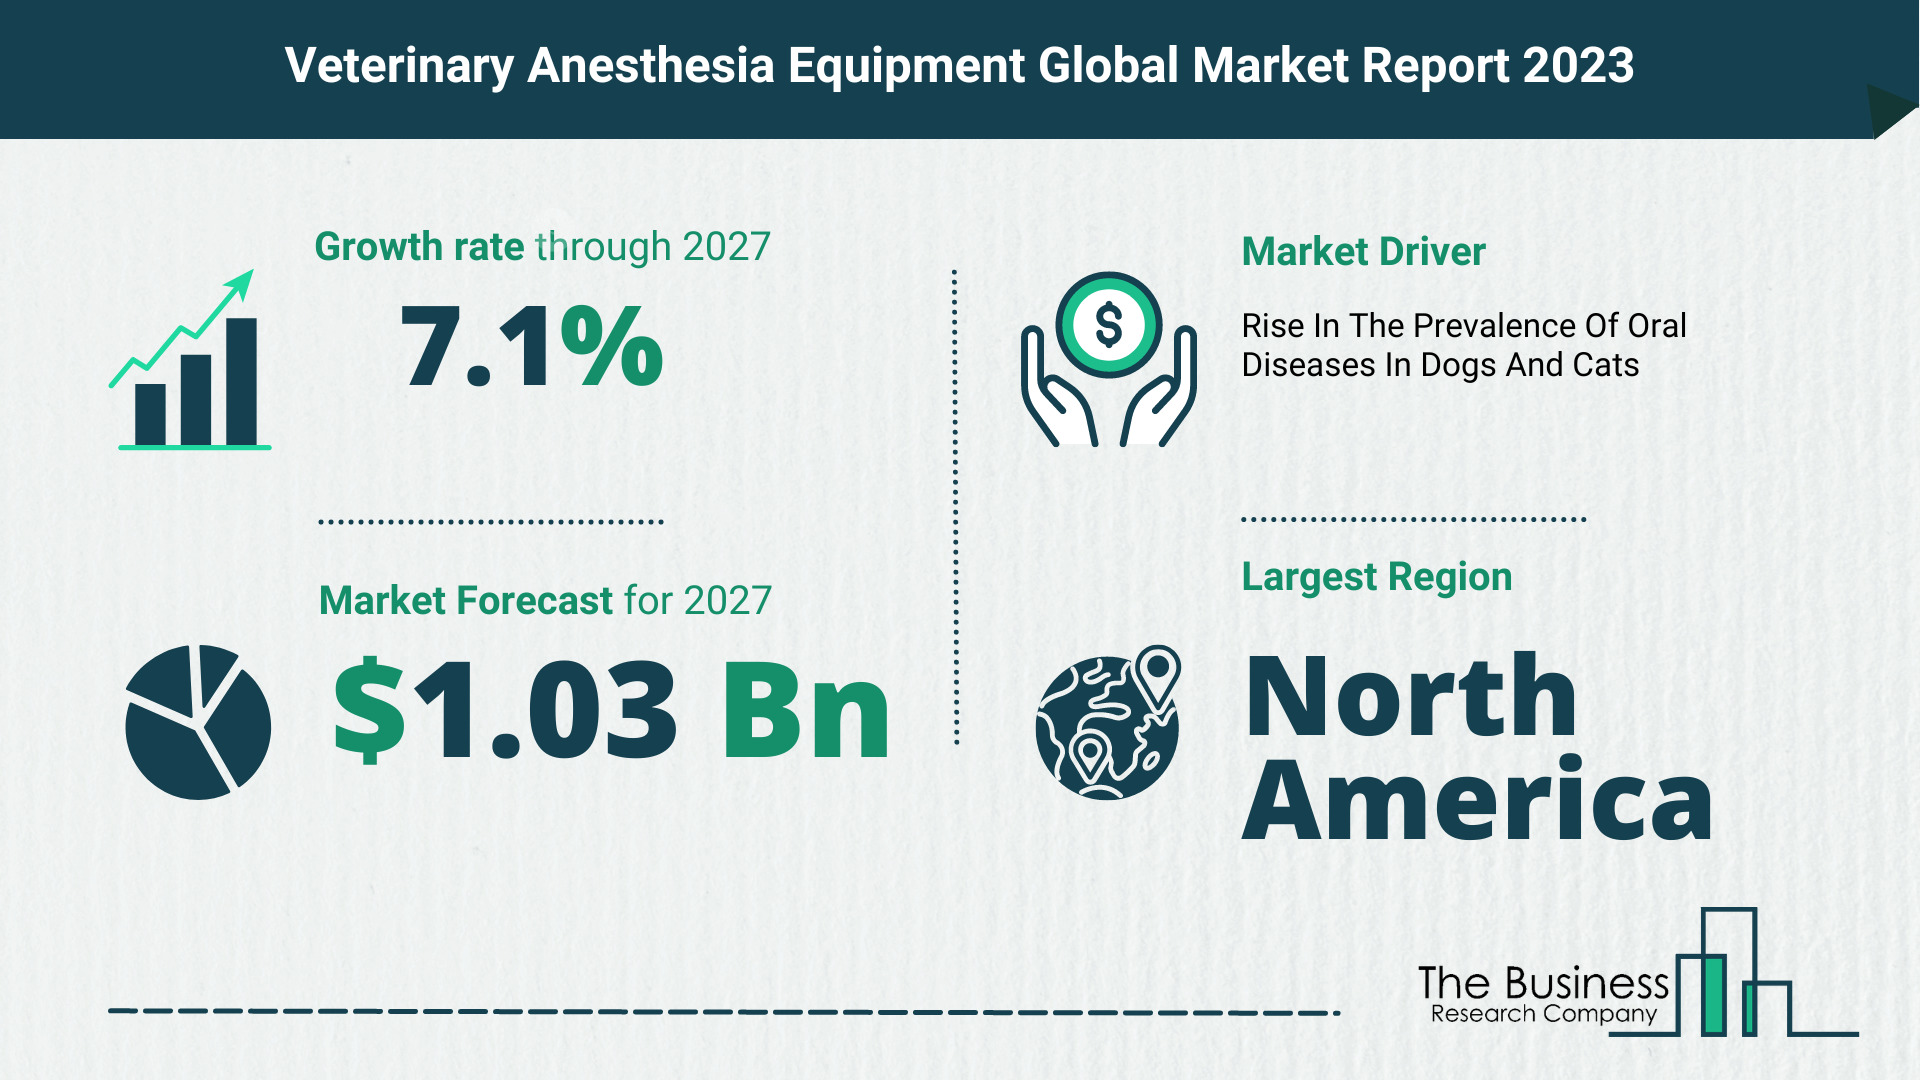 Global Veterinary Anesthesia Equipment Market Size